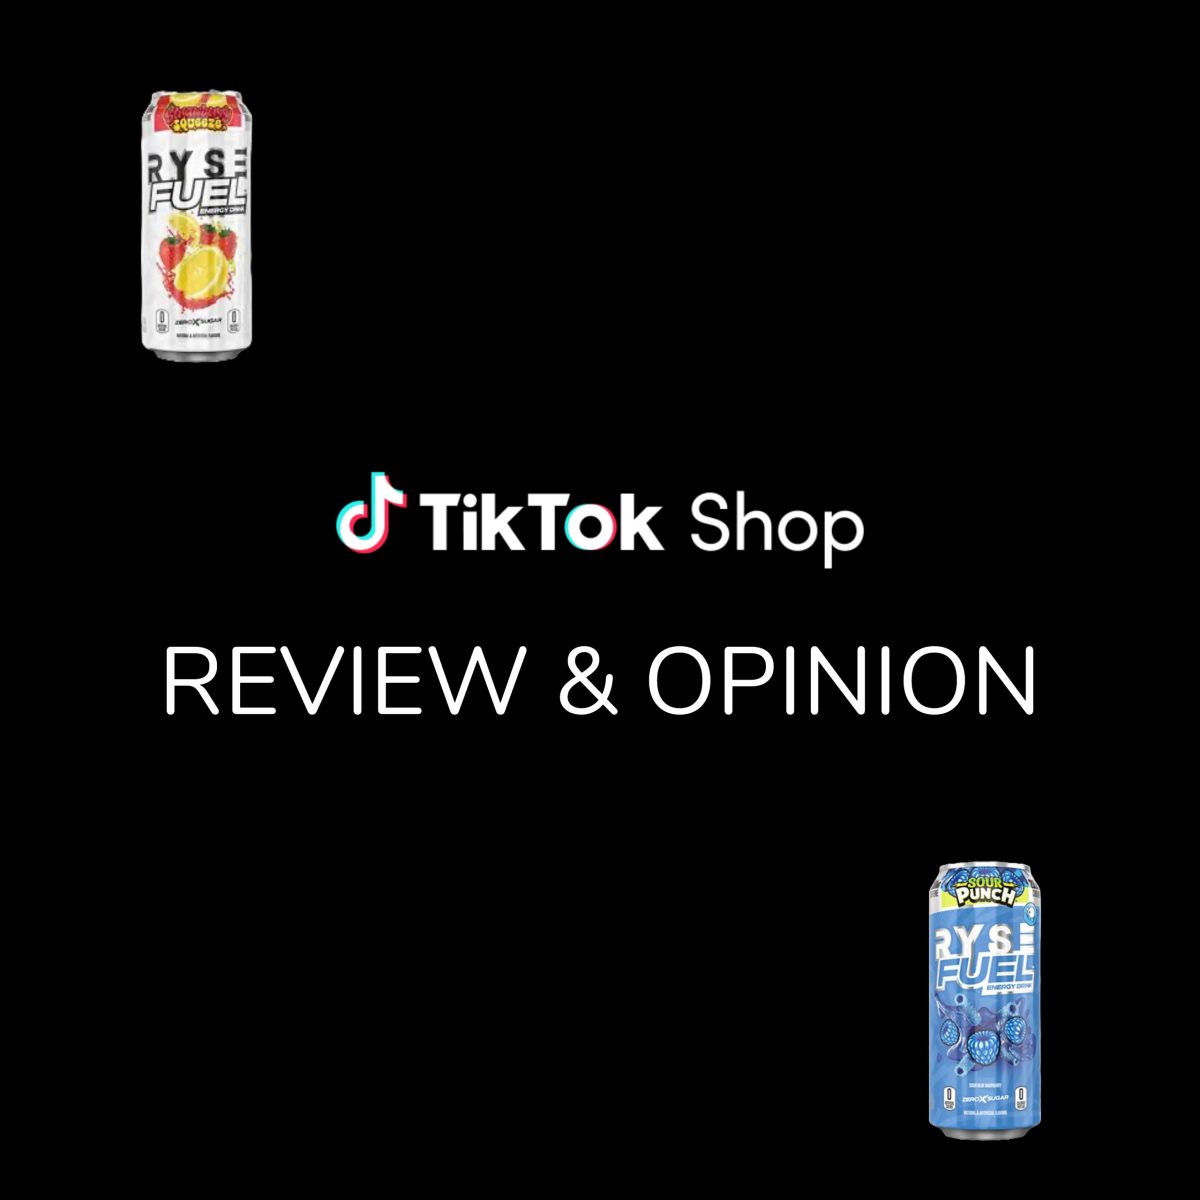 TikTok Shop Review & Opinion, Ryse Fuel